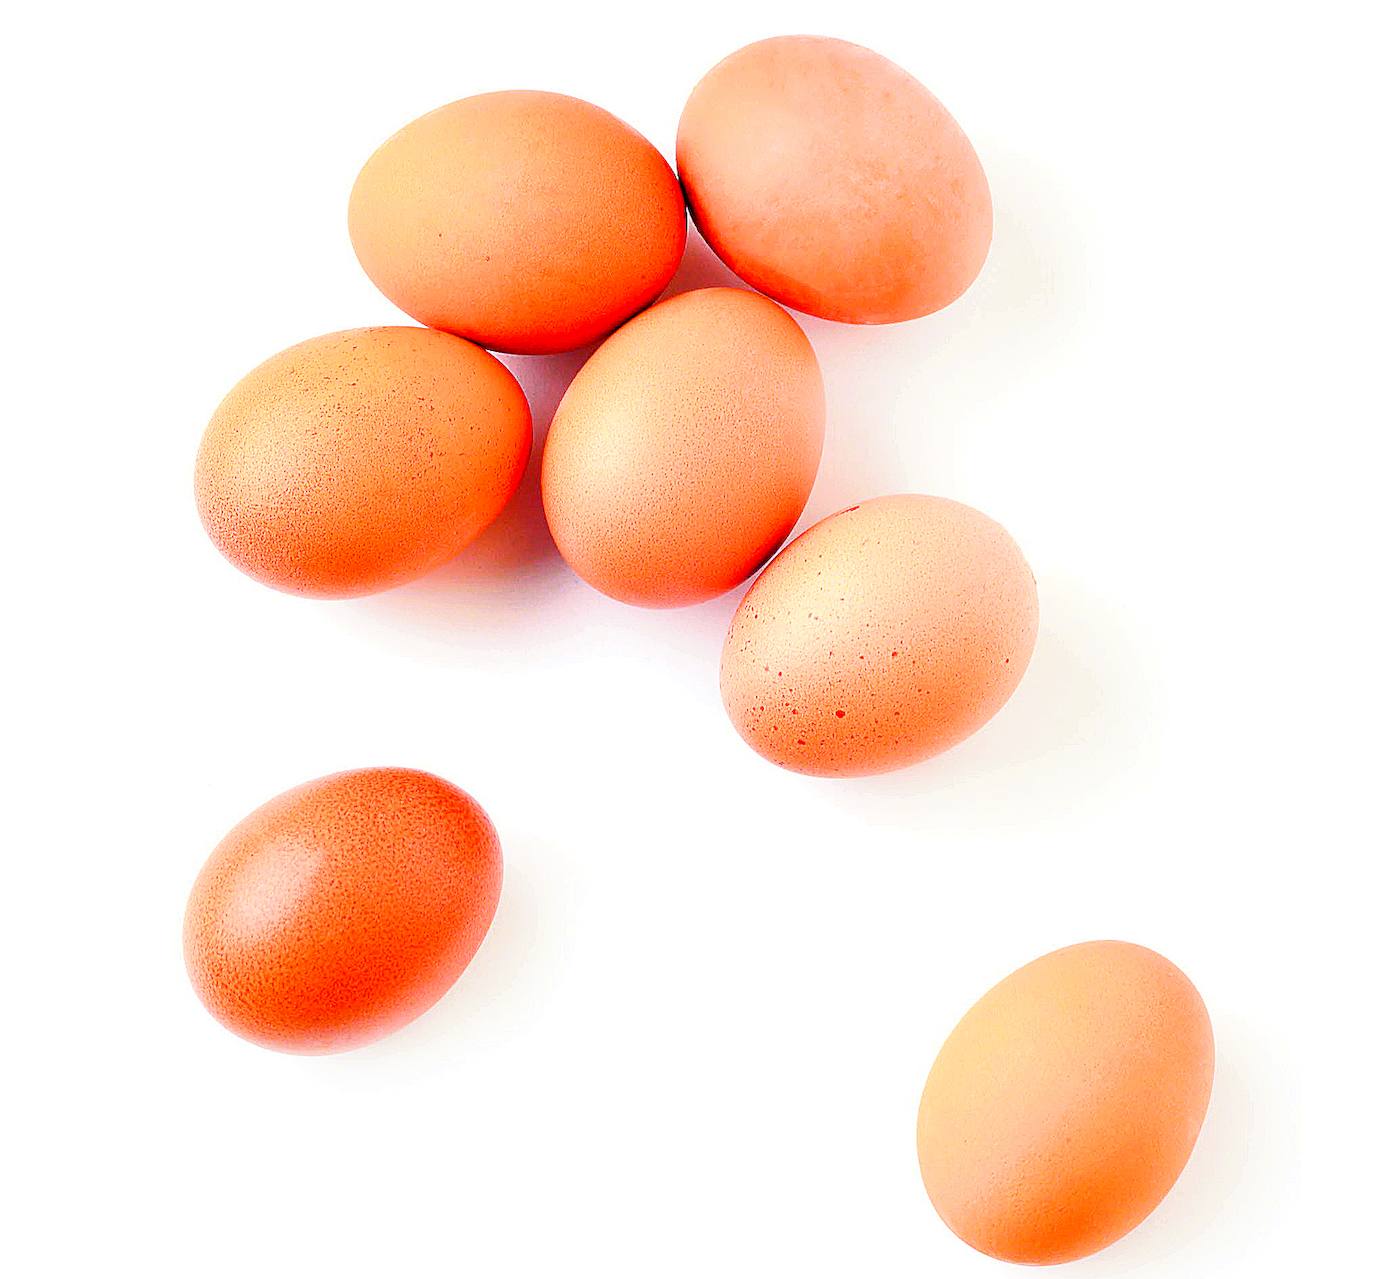 La importancia nutricional e histórica del huevo